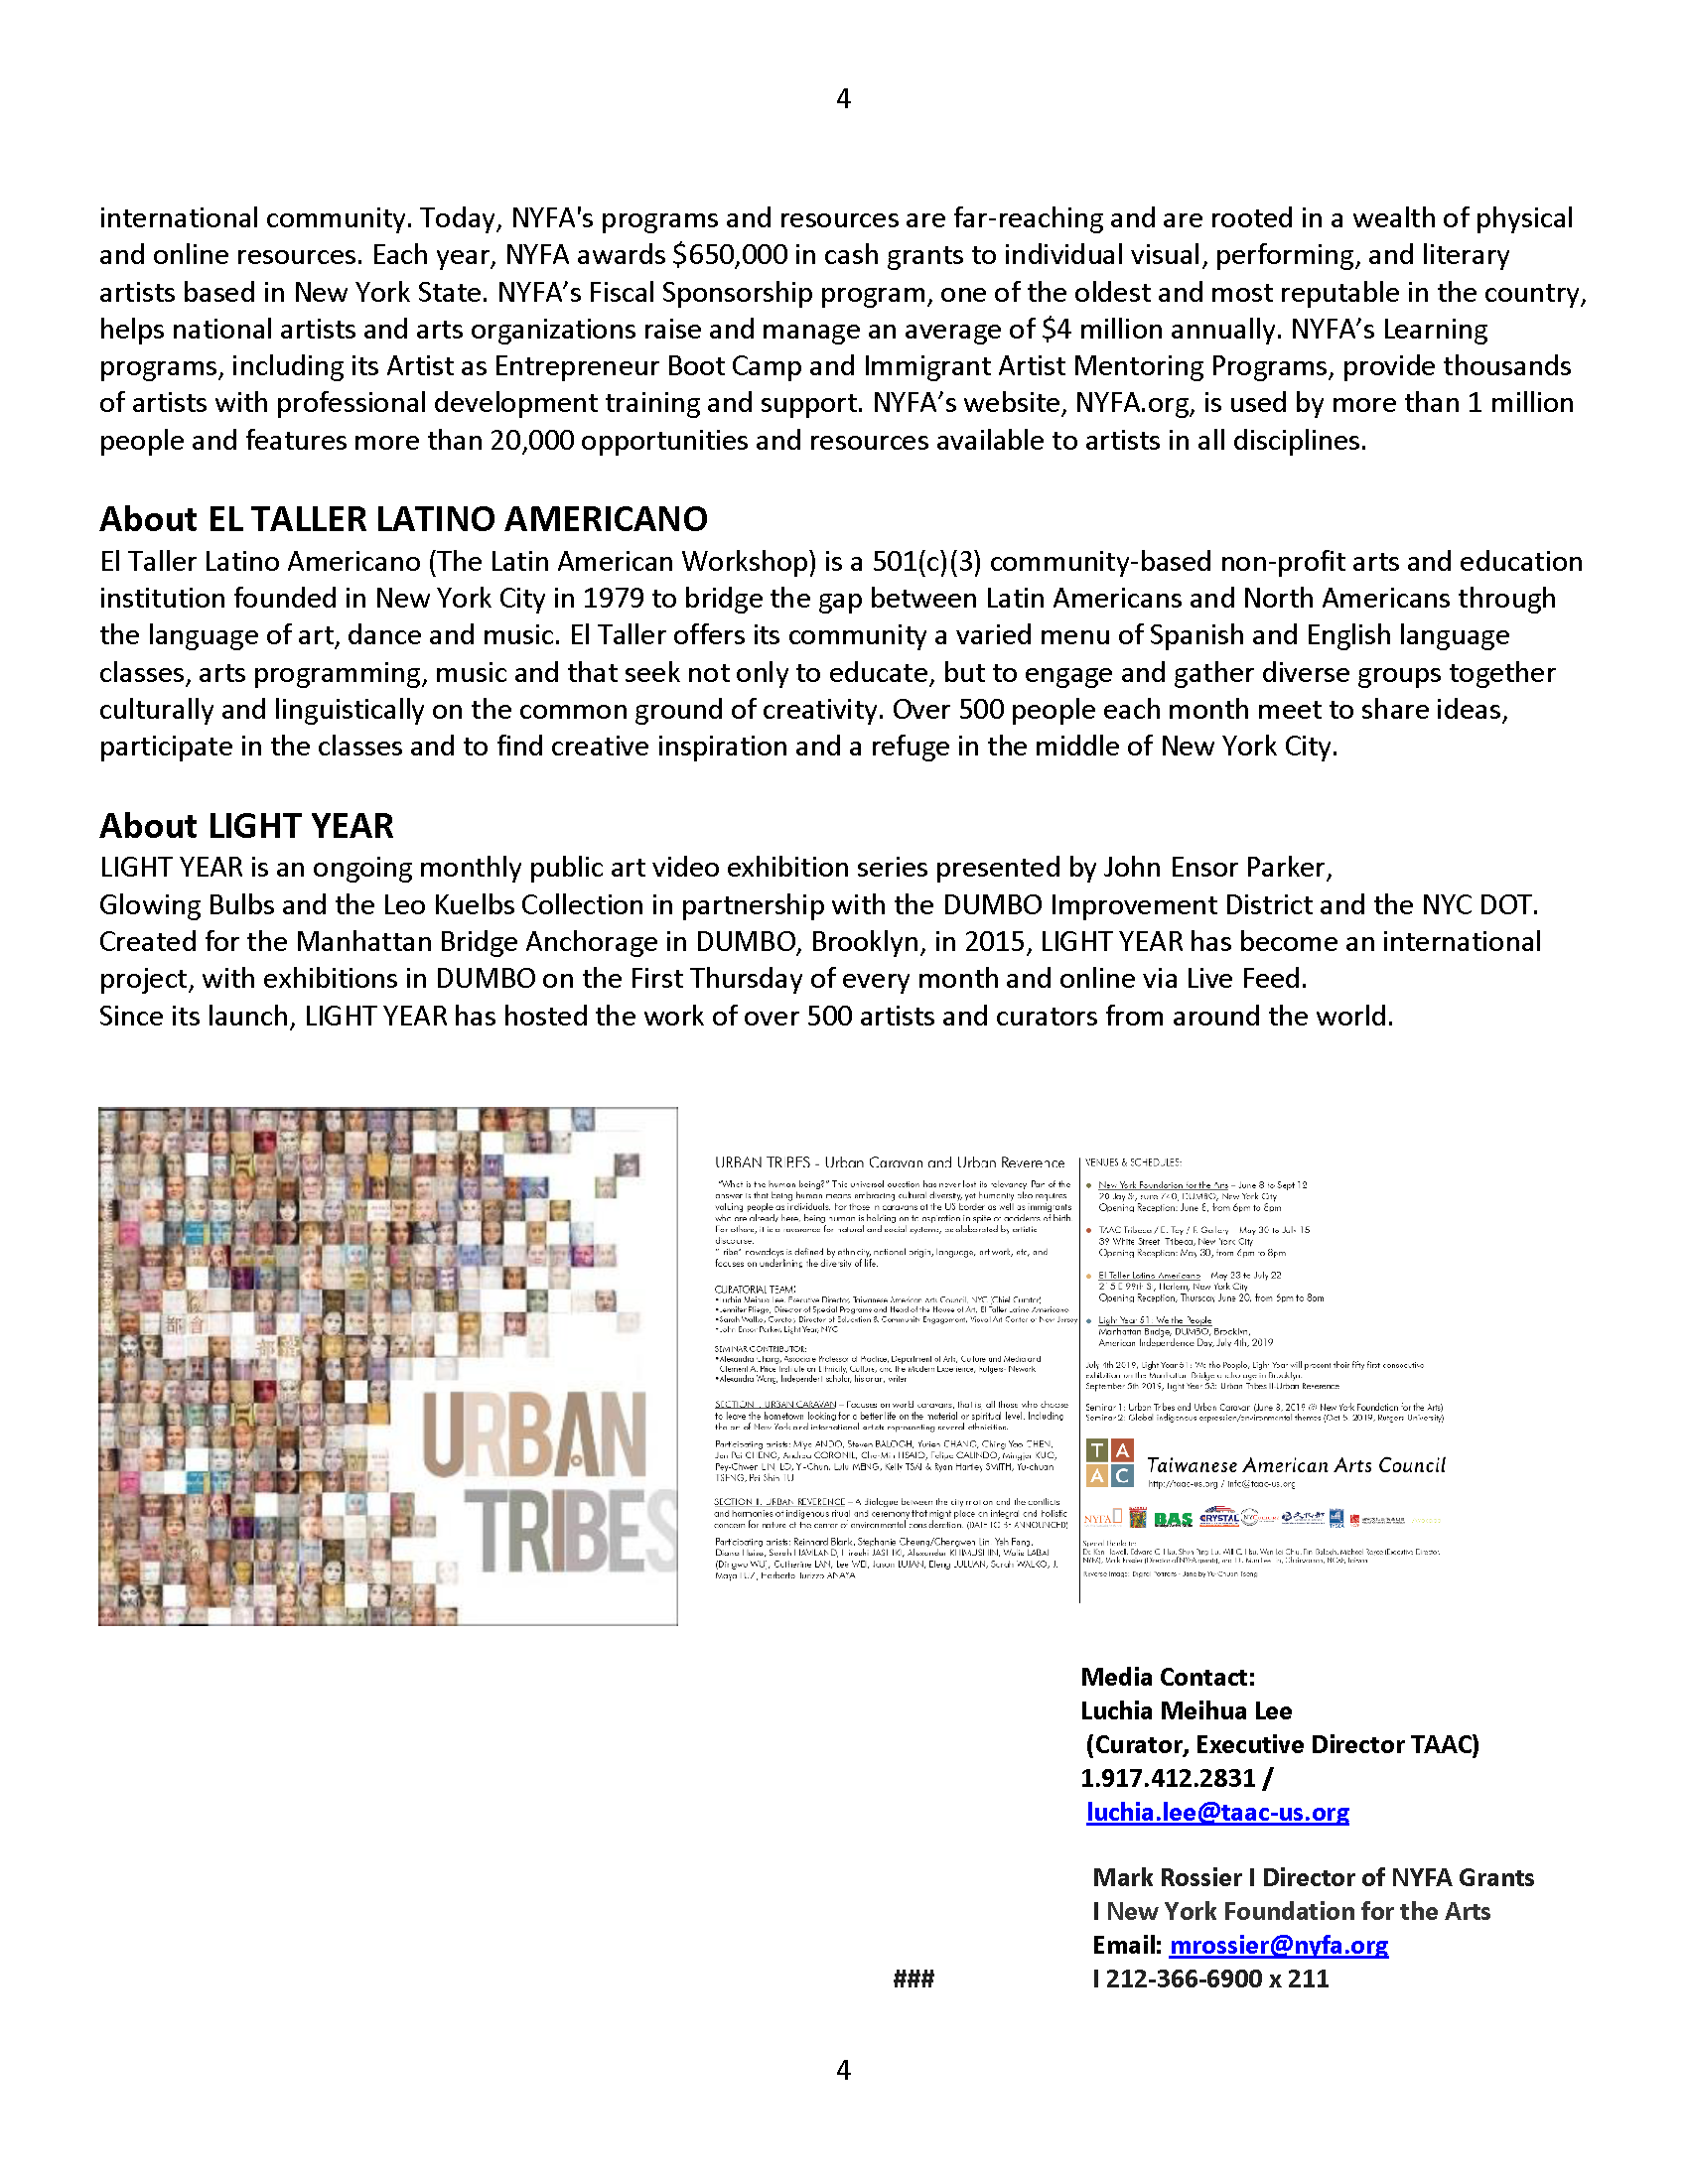 Urban Tribes-NYFA Press Release -EN_Page_4.png